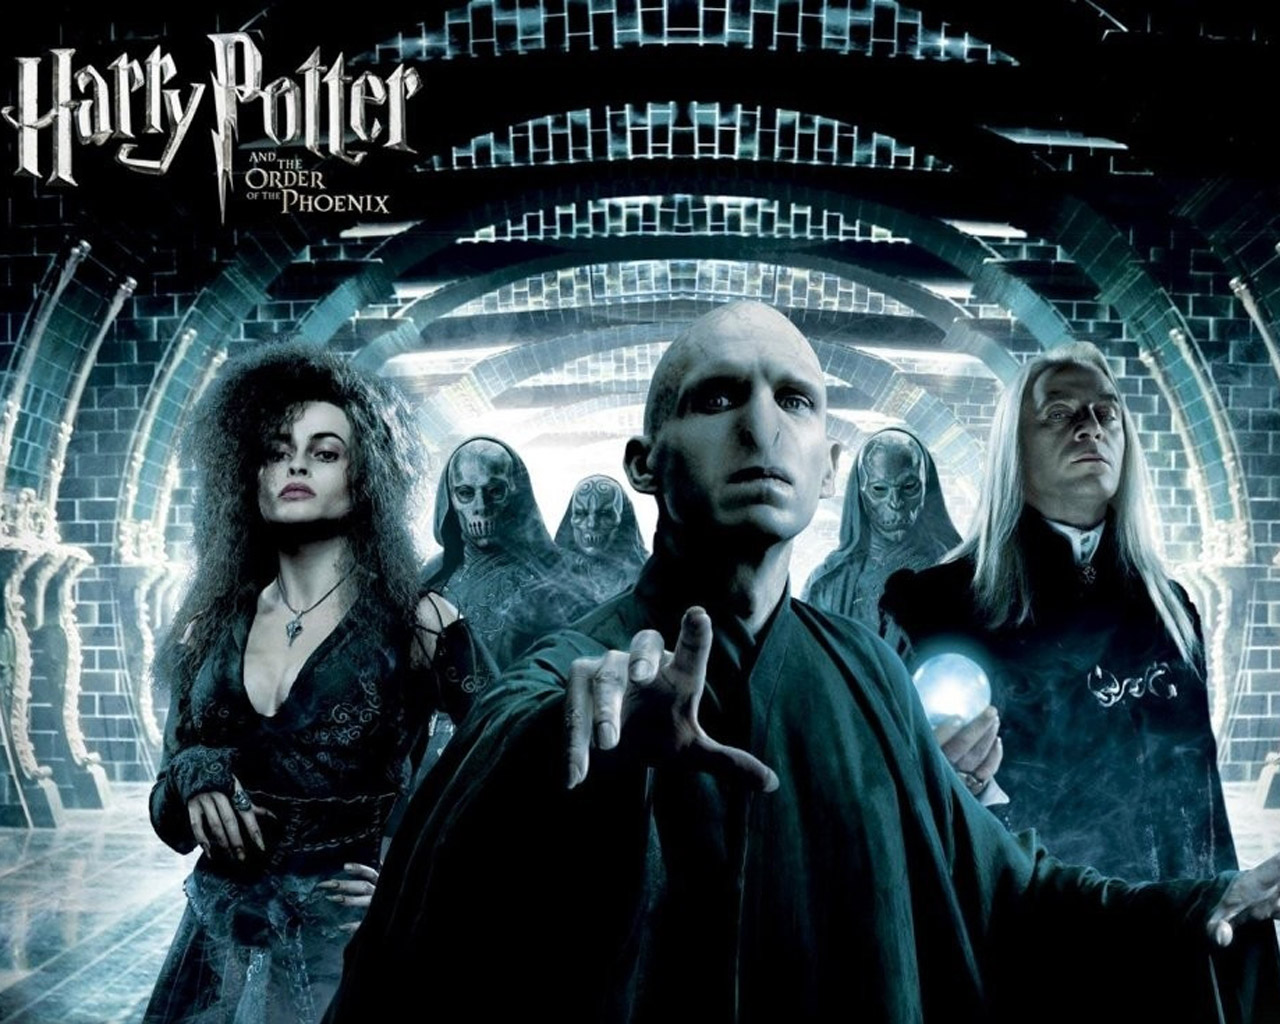 HP characters - Harry Potter Wallpaper (32990493) - Fanpop